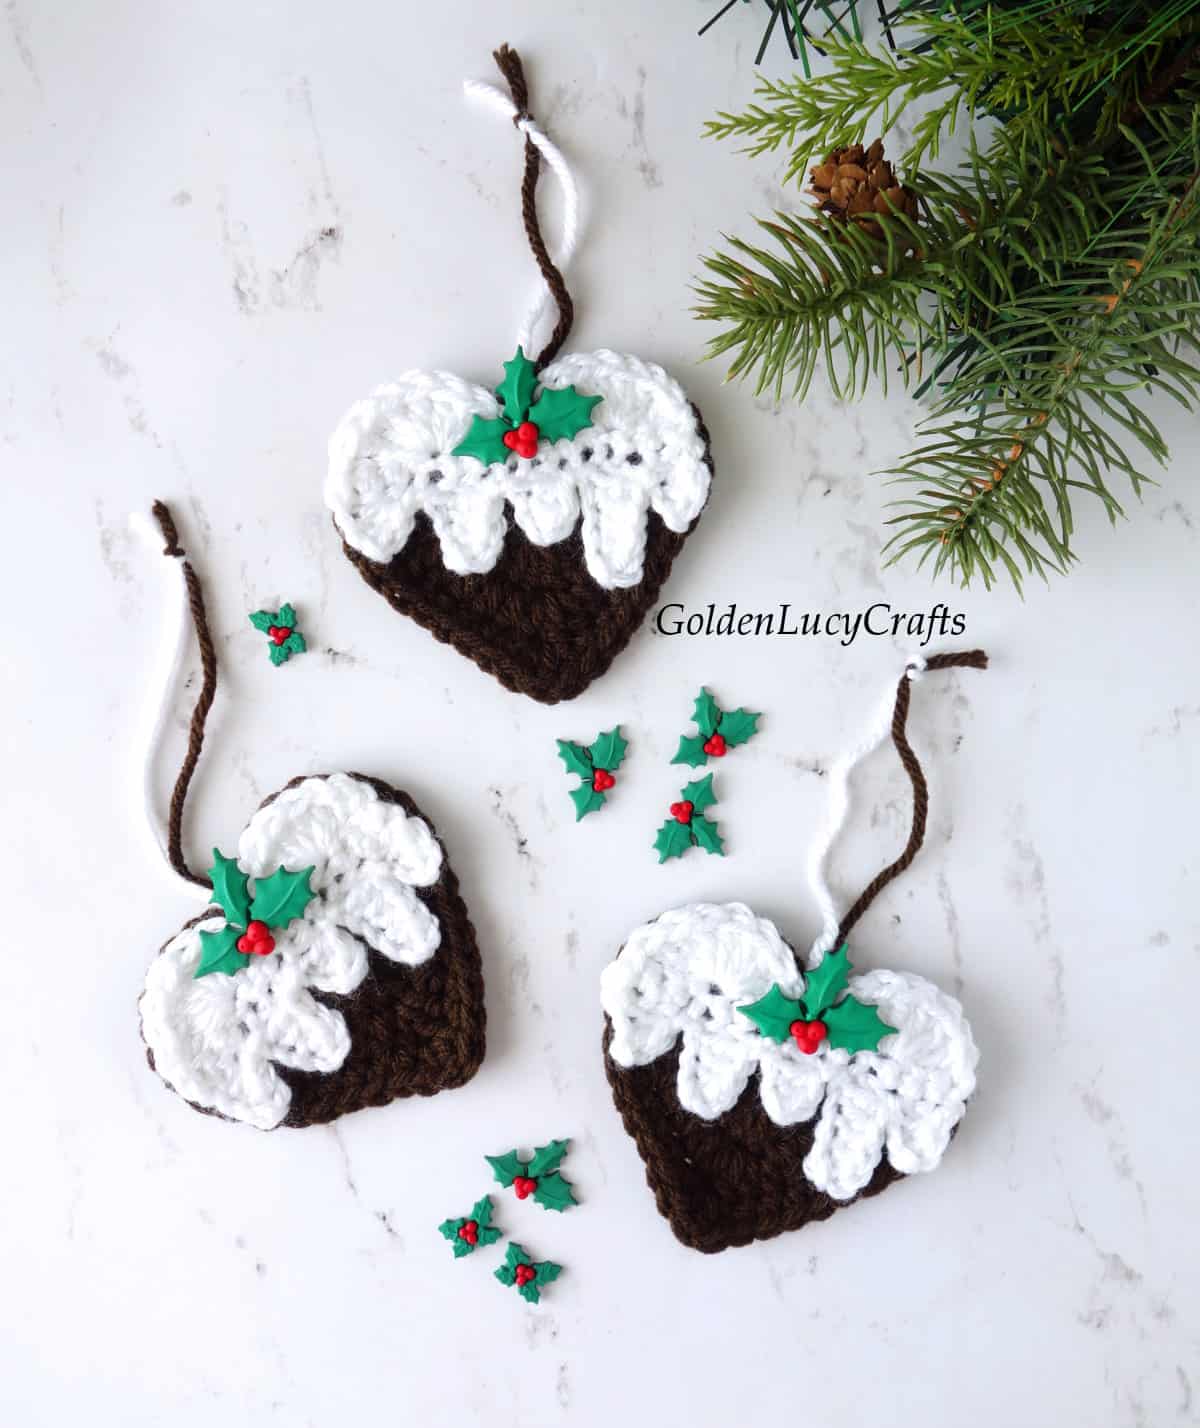 Three crochet Christmas pudding heart-shaped ornaments